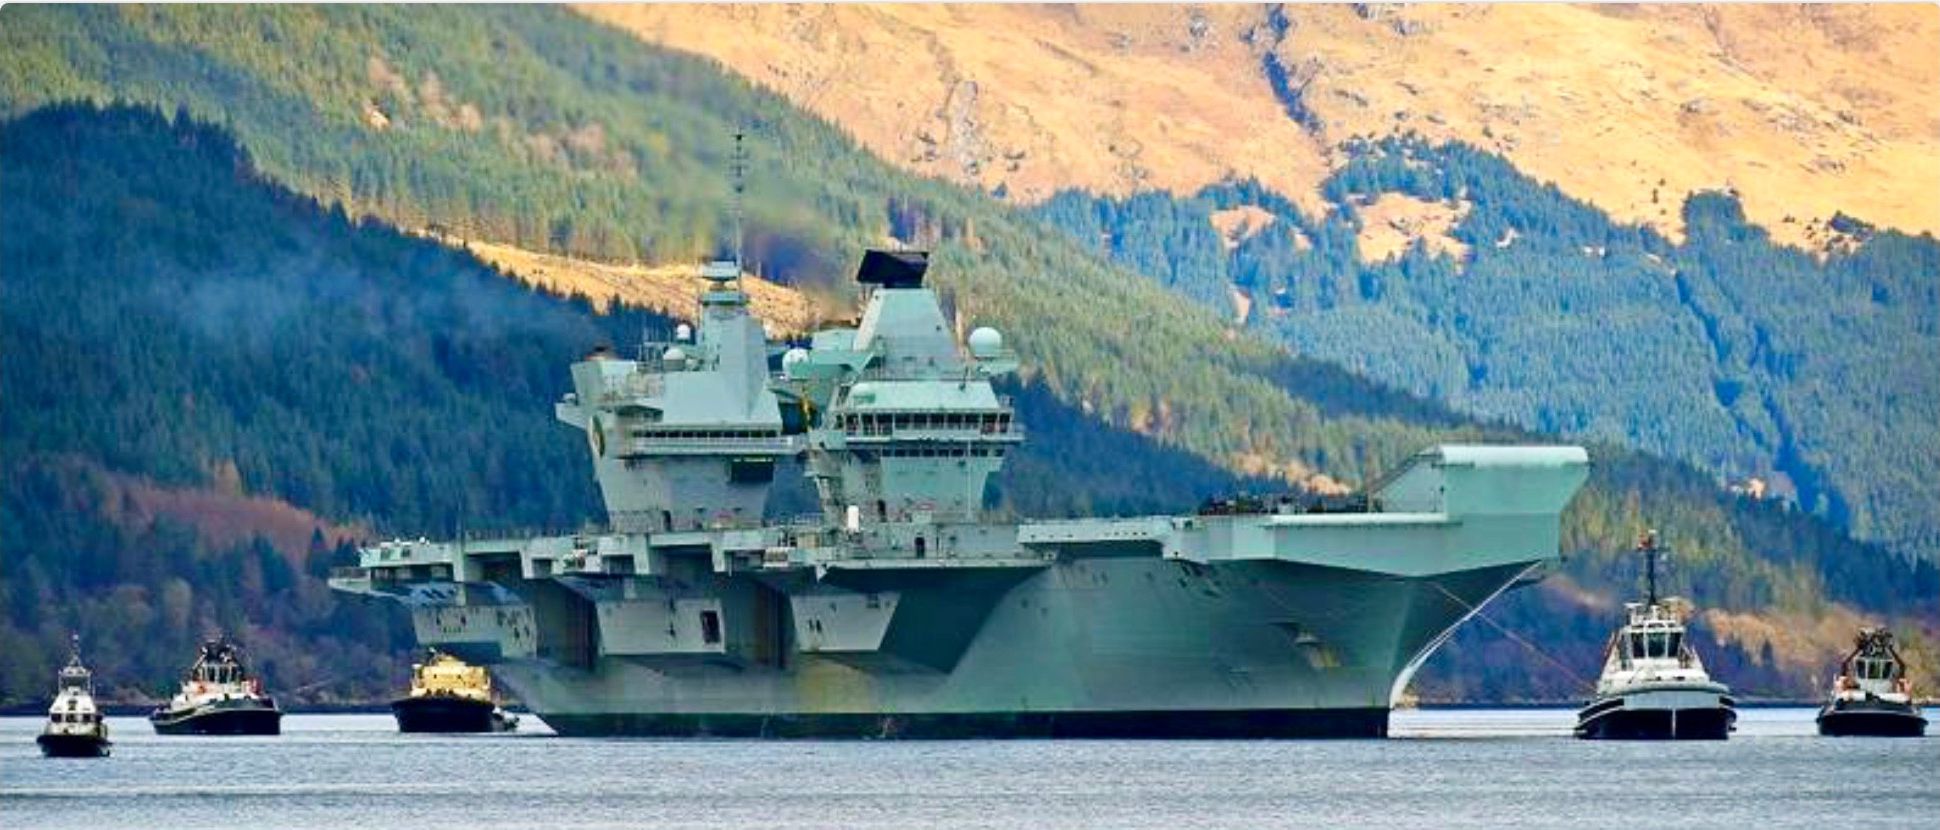 Aircraft carrier HMS Queen Elizabeth in Loch Long